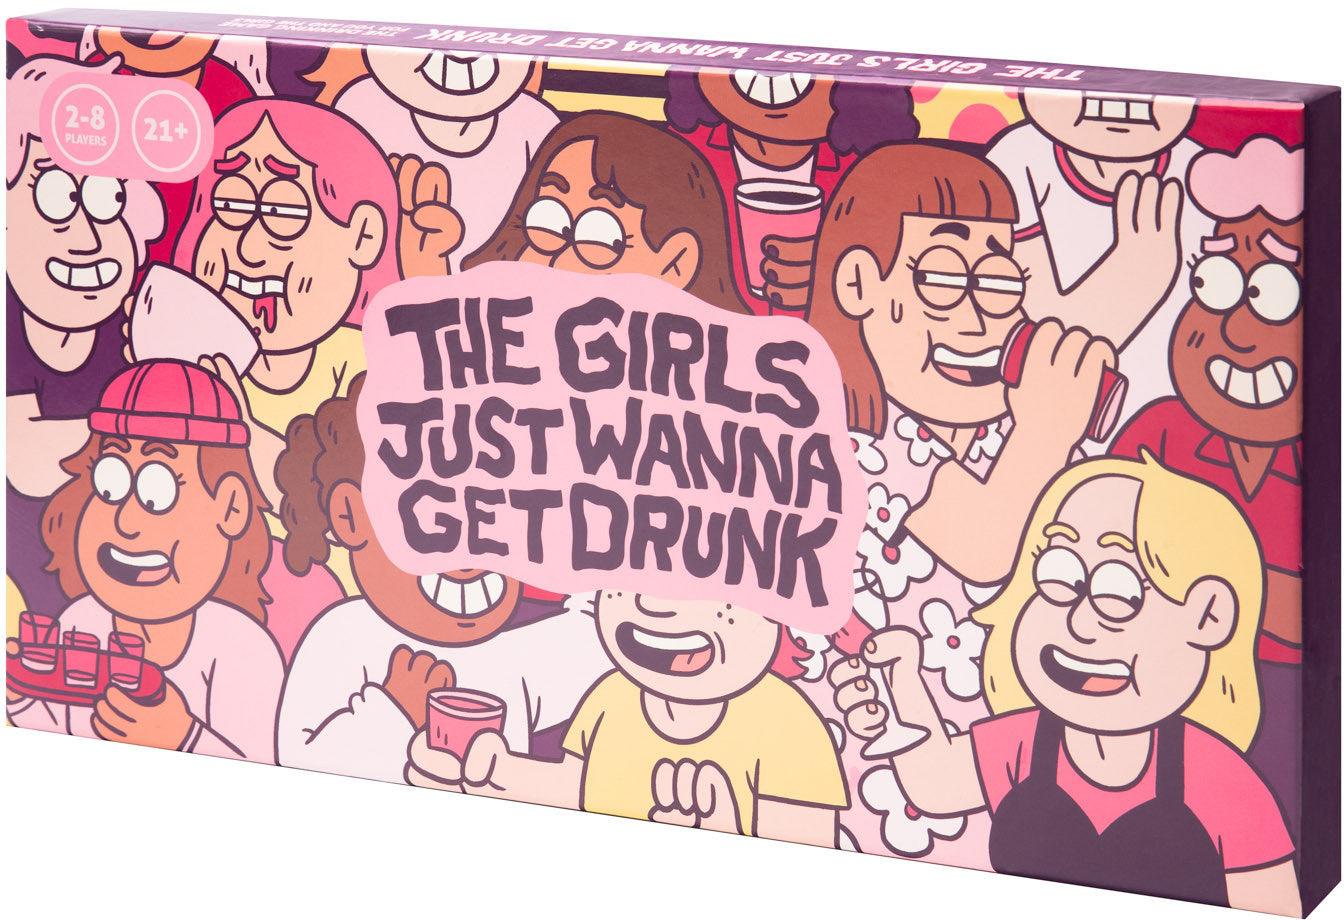 VR-86121 The Girls Just Wanna Get Drunk - Game King Studios - Titan Pop Culture